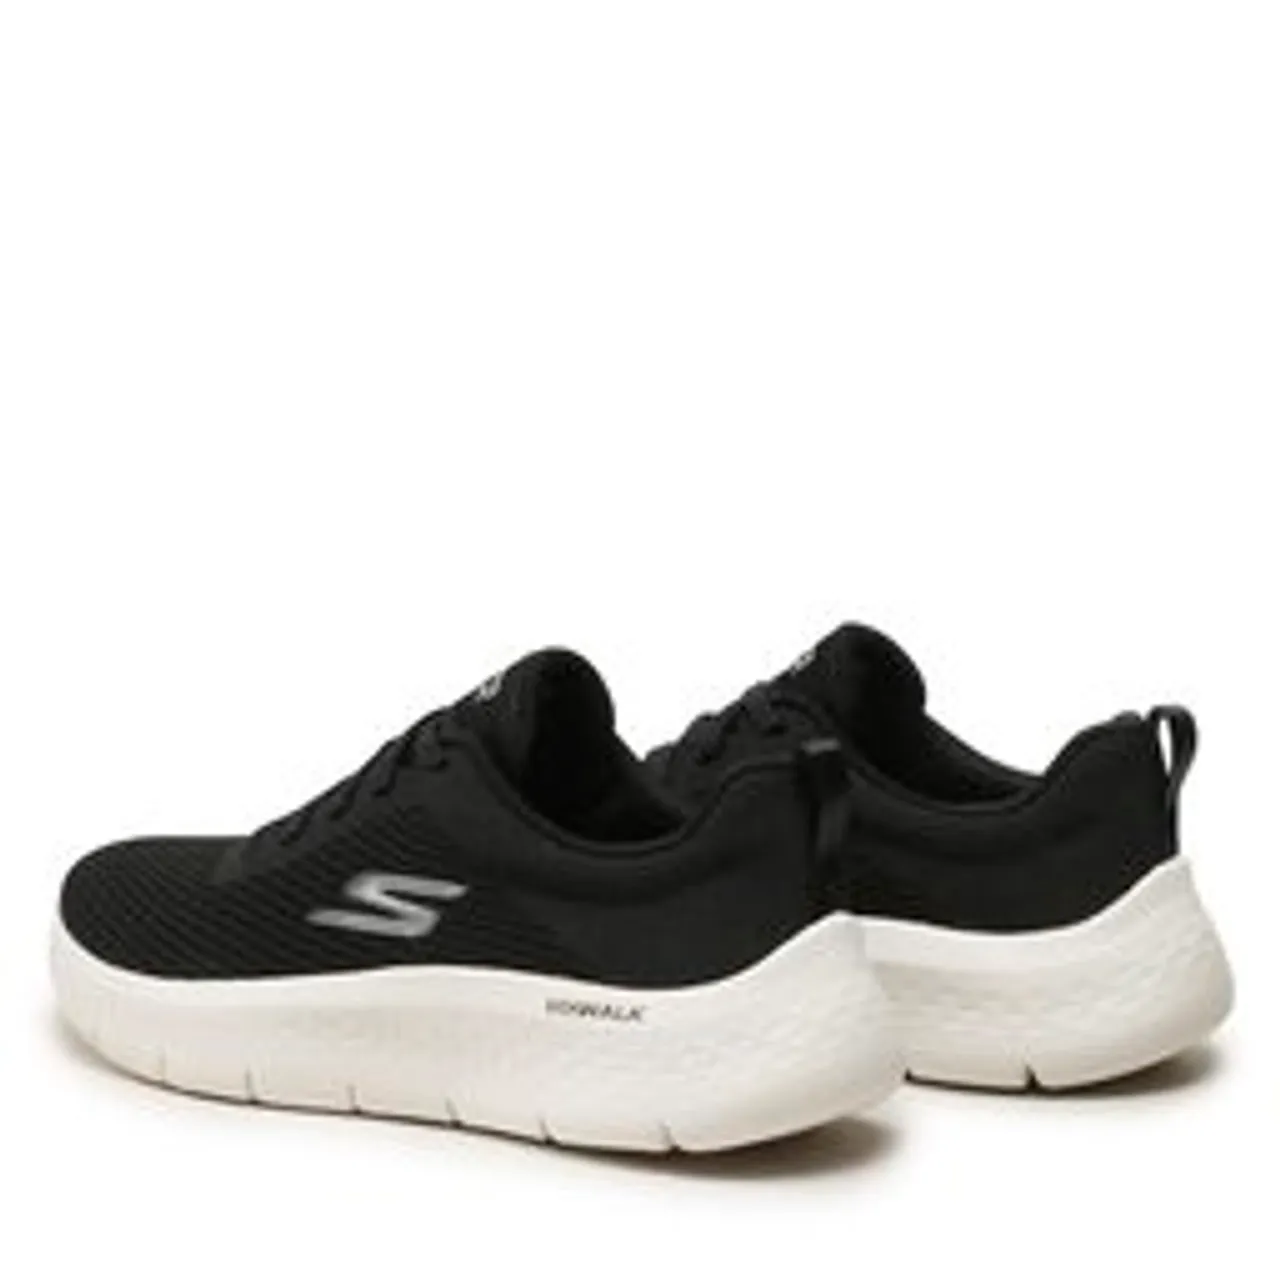 Sneakers Skechers Go Walk Flex - Alani 124952/BKW Black/White